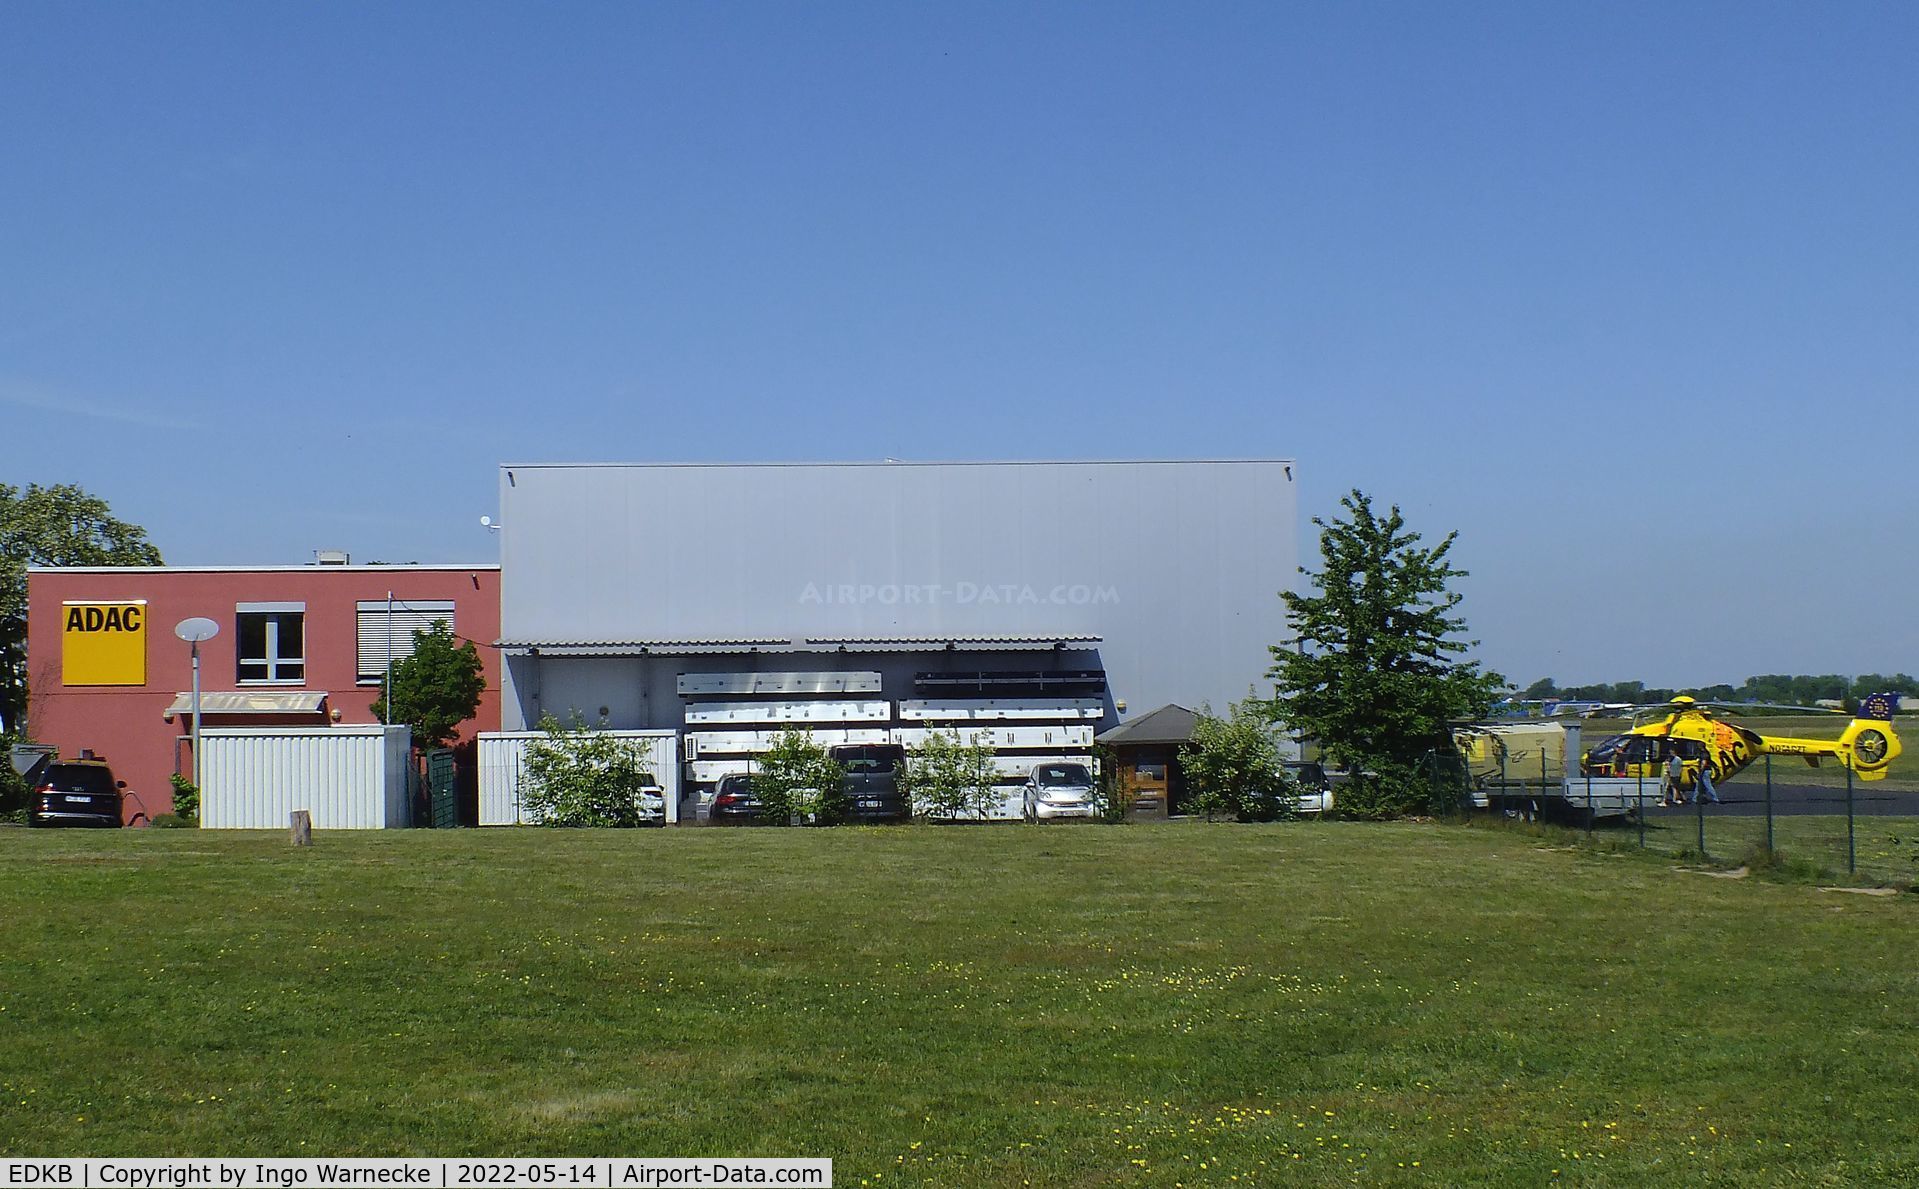 Bonn-Hangelar Airport, Sankt Augustin Germany (EDKB) - offices and hangar of ADAC Heliservice at Bonn-Hangelar airfield